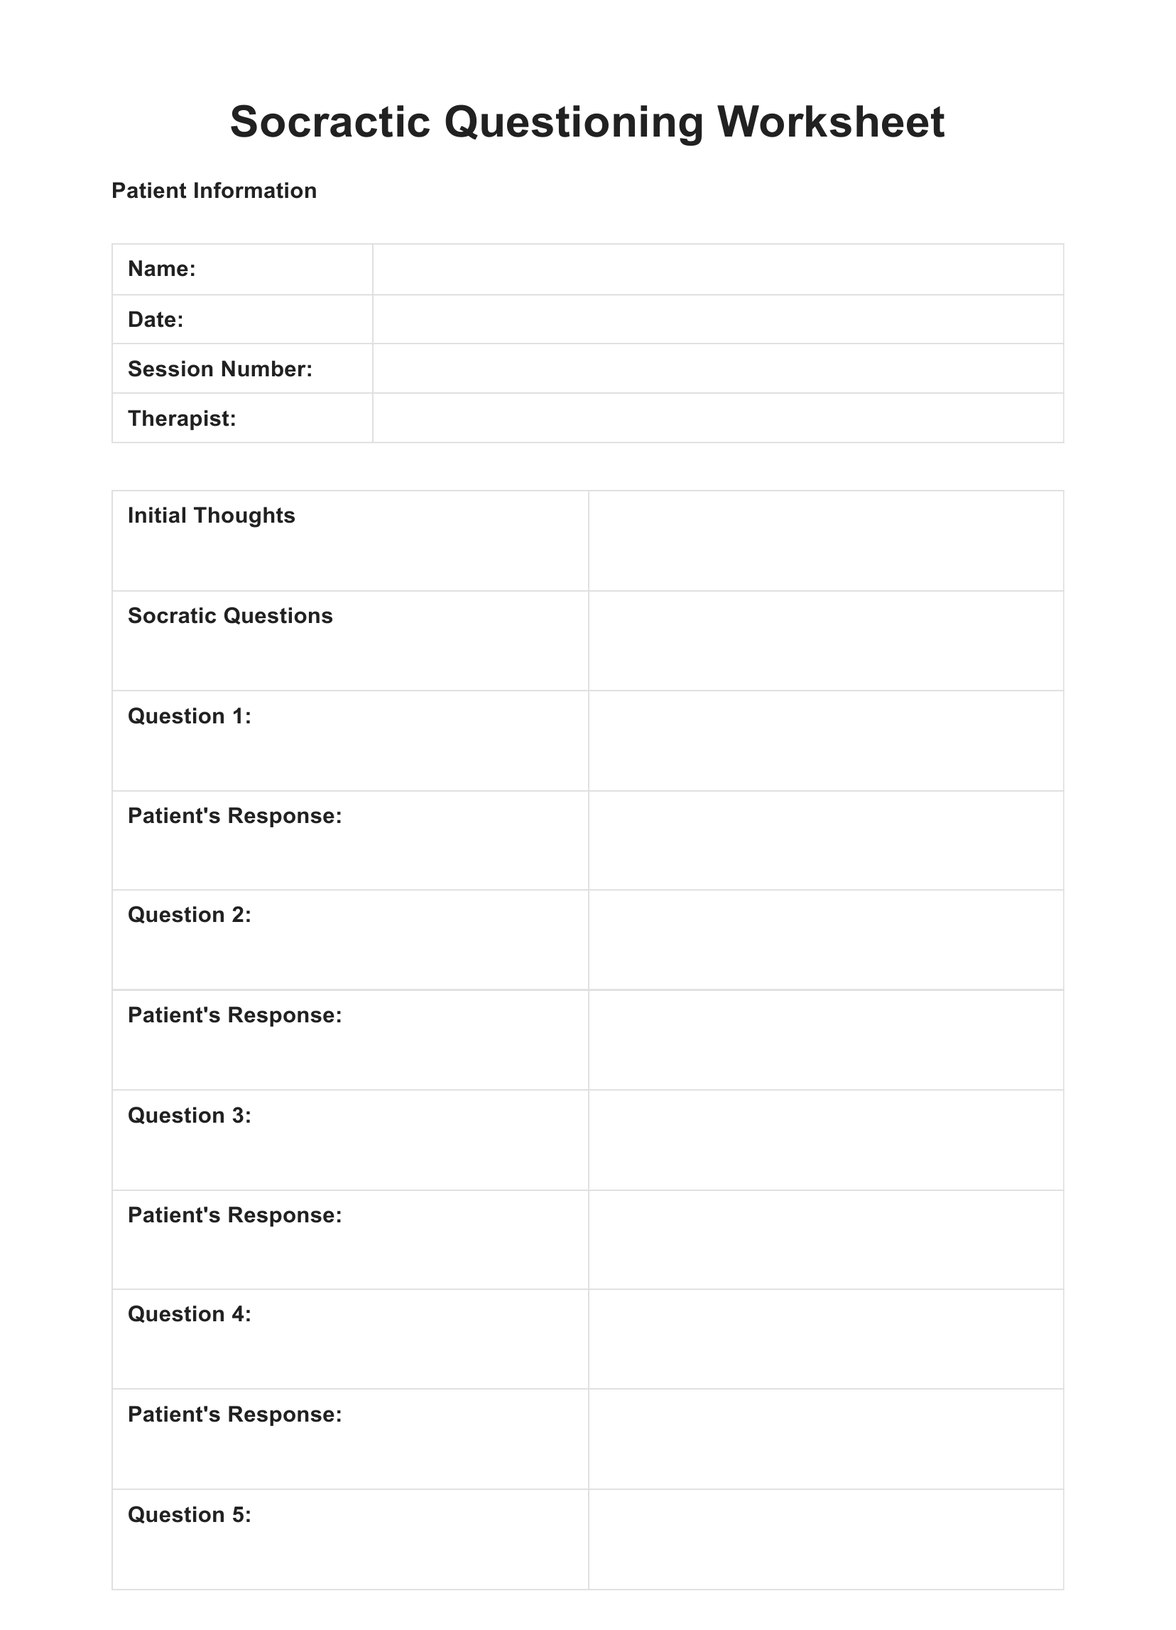 Socratic Questioning Worksheet PDF Example